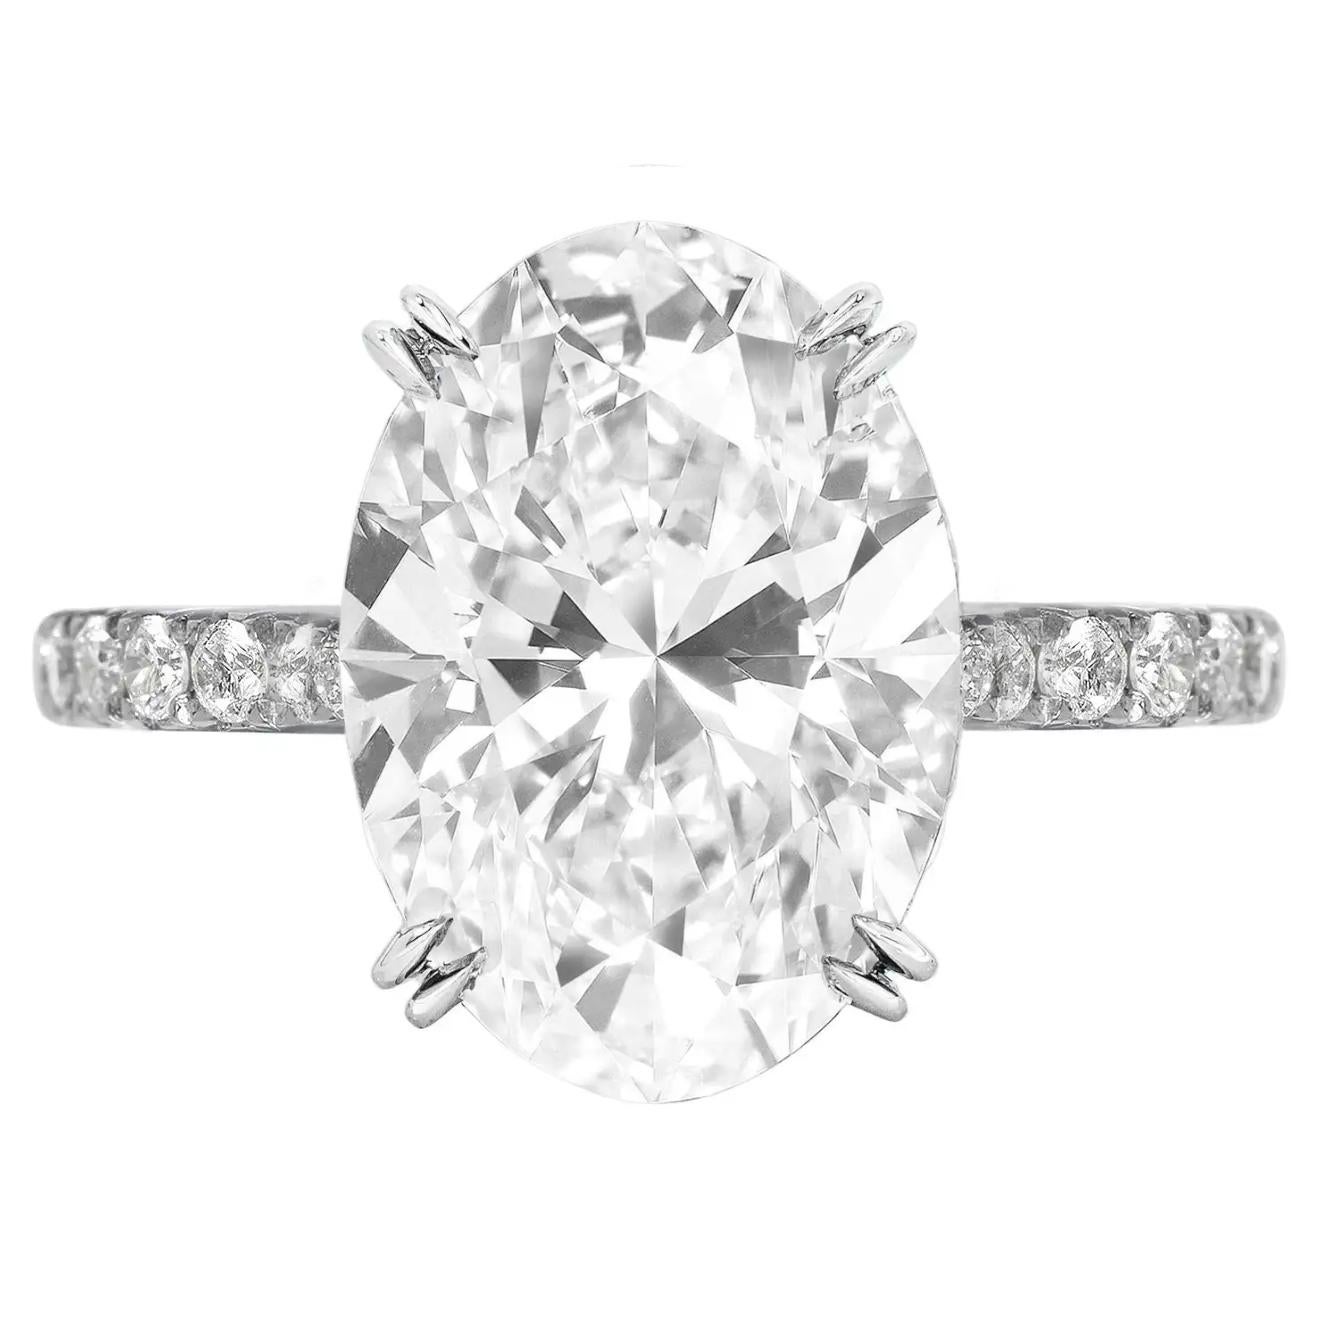 2 carat diamond ring price australia